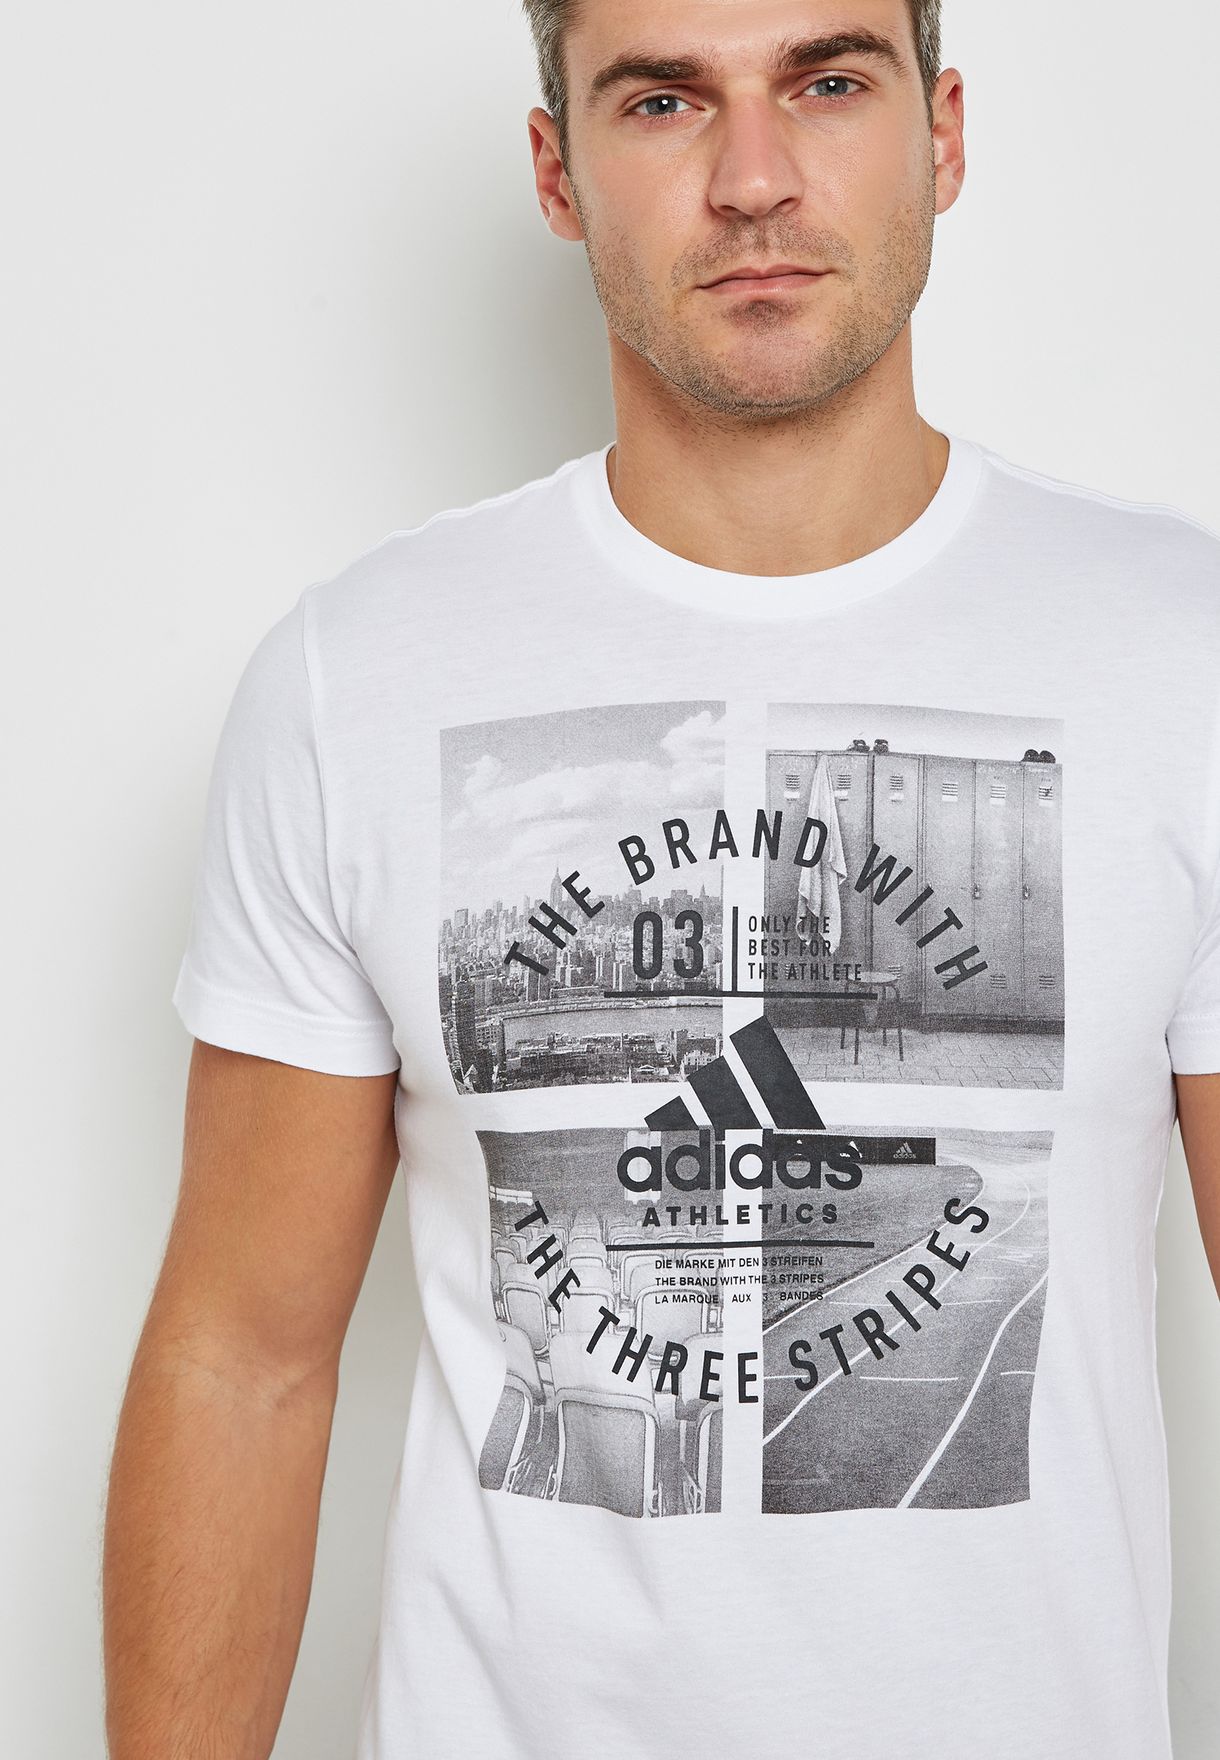 Compadecerse Pompeya arrojar polvo en los ojos Buy adidas white Athletic Vibe T-Shirt for Men in MENA, Worldwide